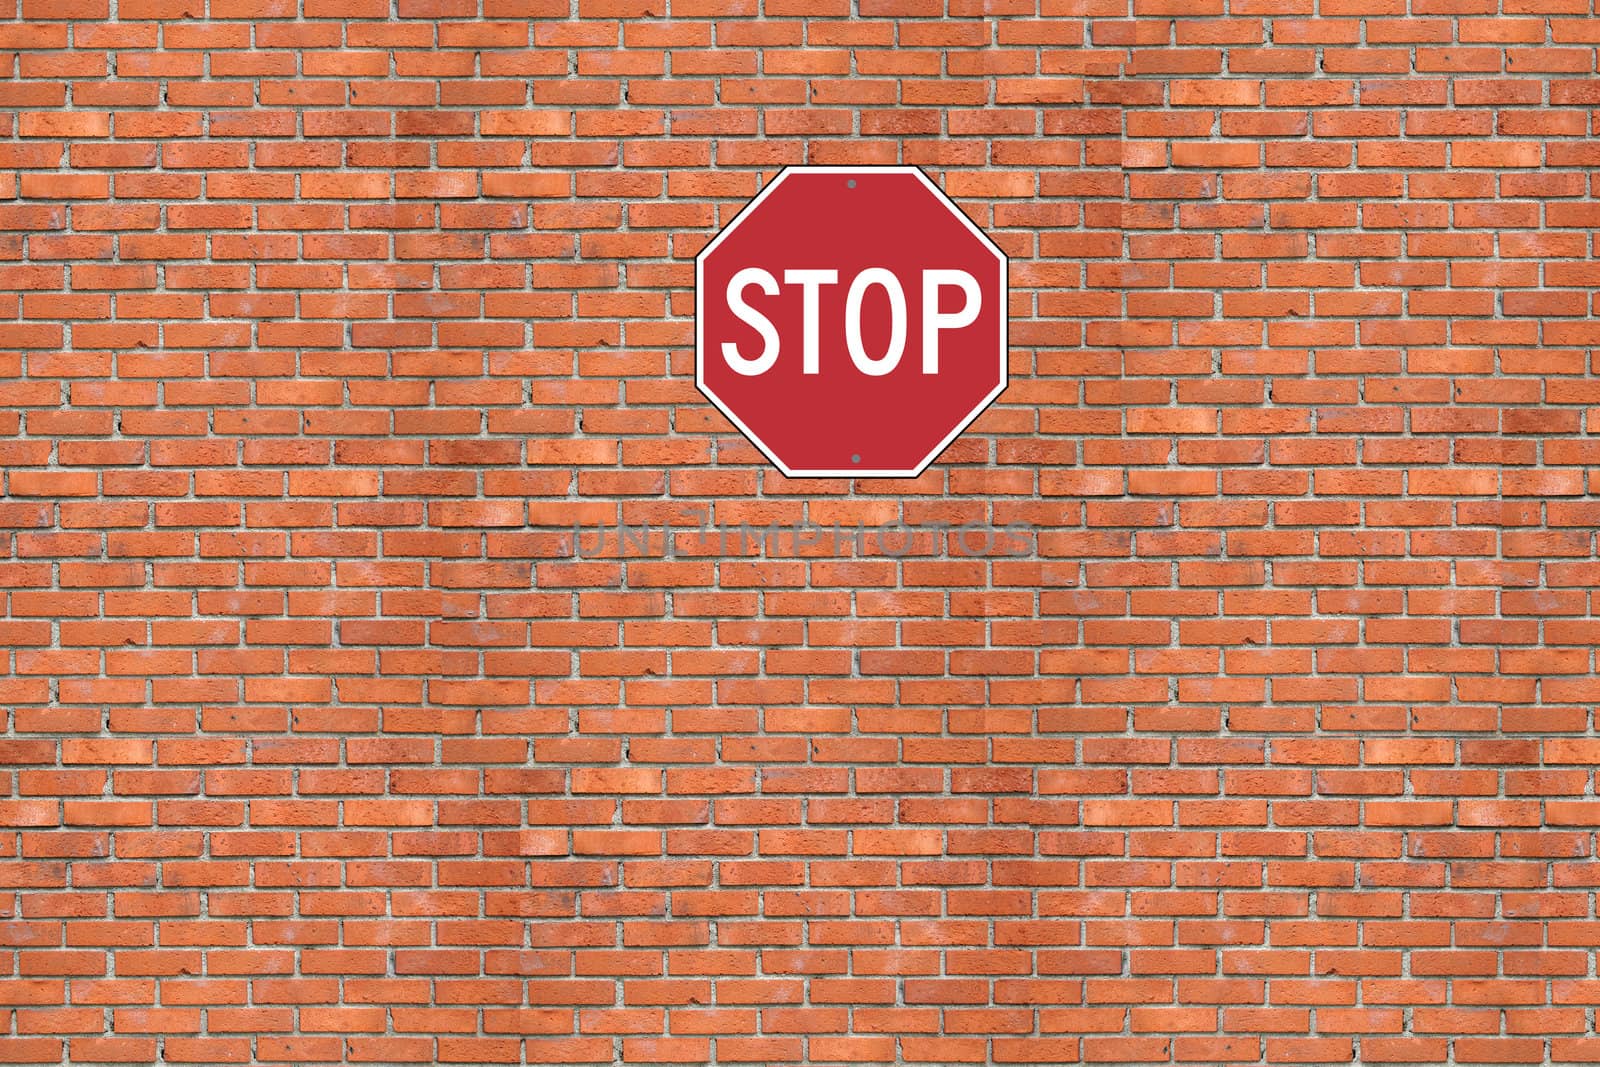 Stop. Brick wall by petrkurgan